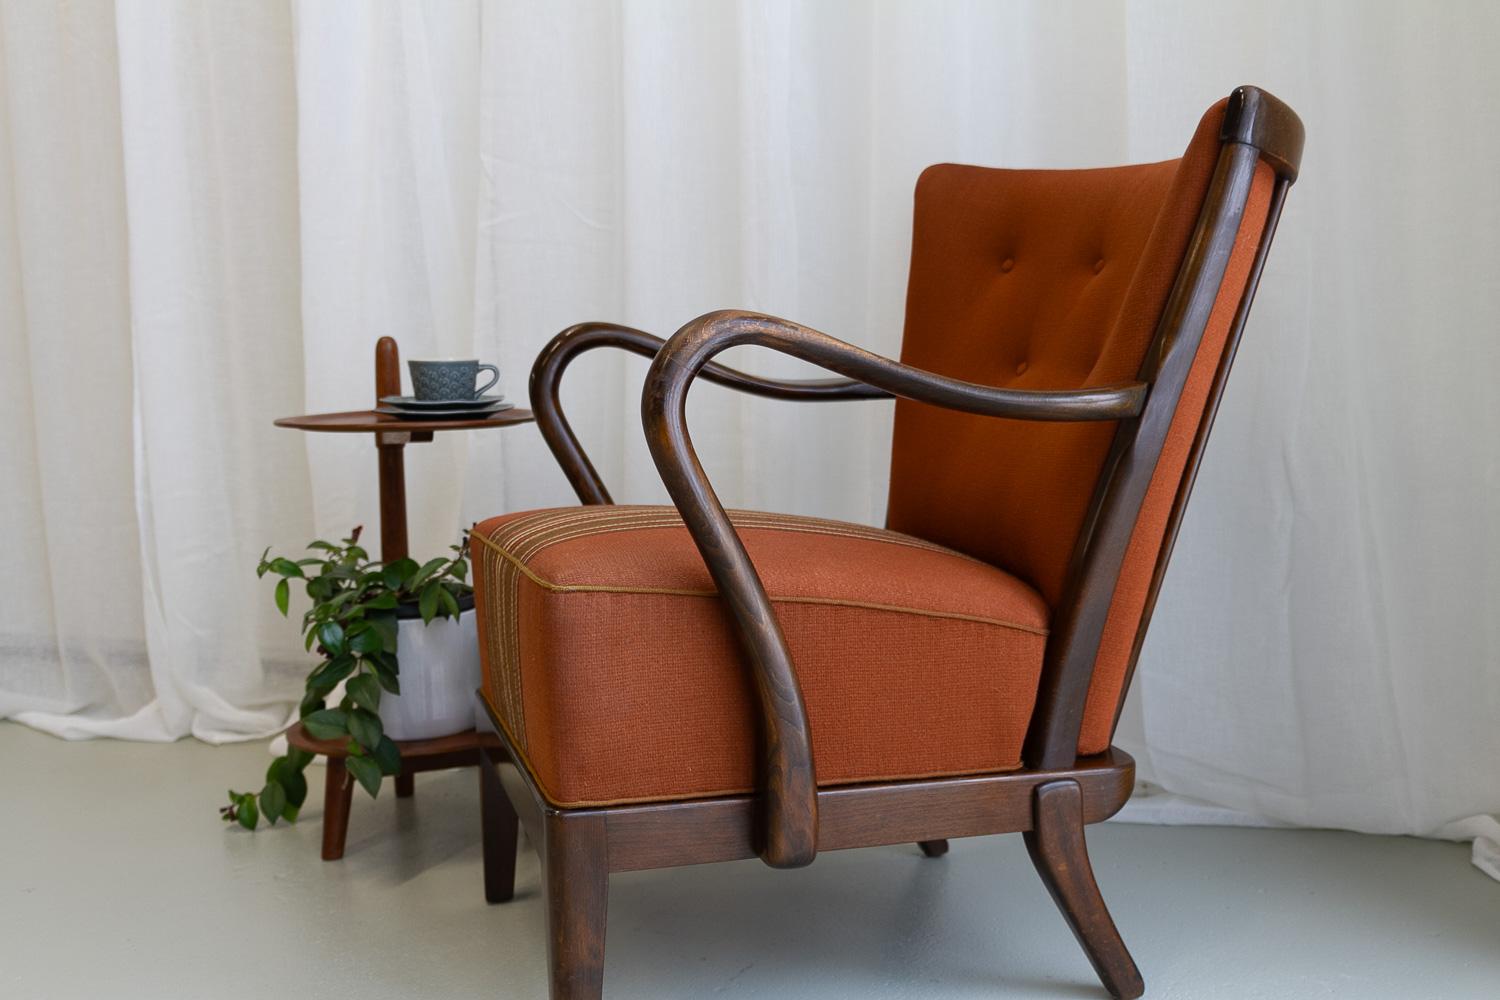 Stained Danish Modern Lounge Chair by Alfred Christensen for Slagelse Møbelværk, 1940s.